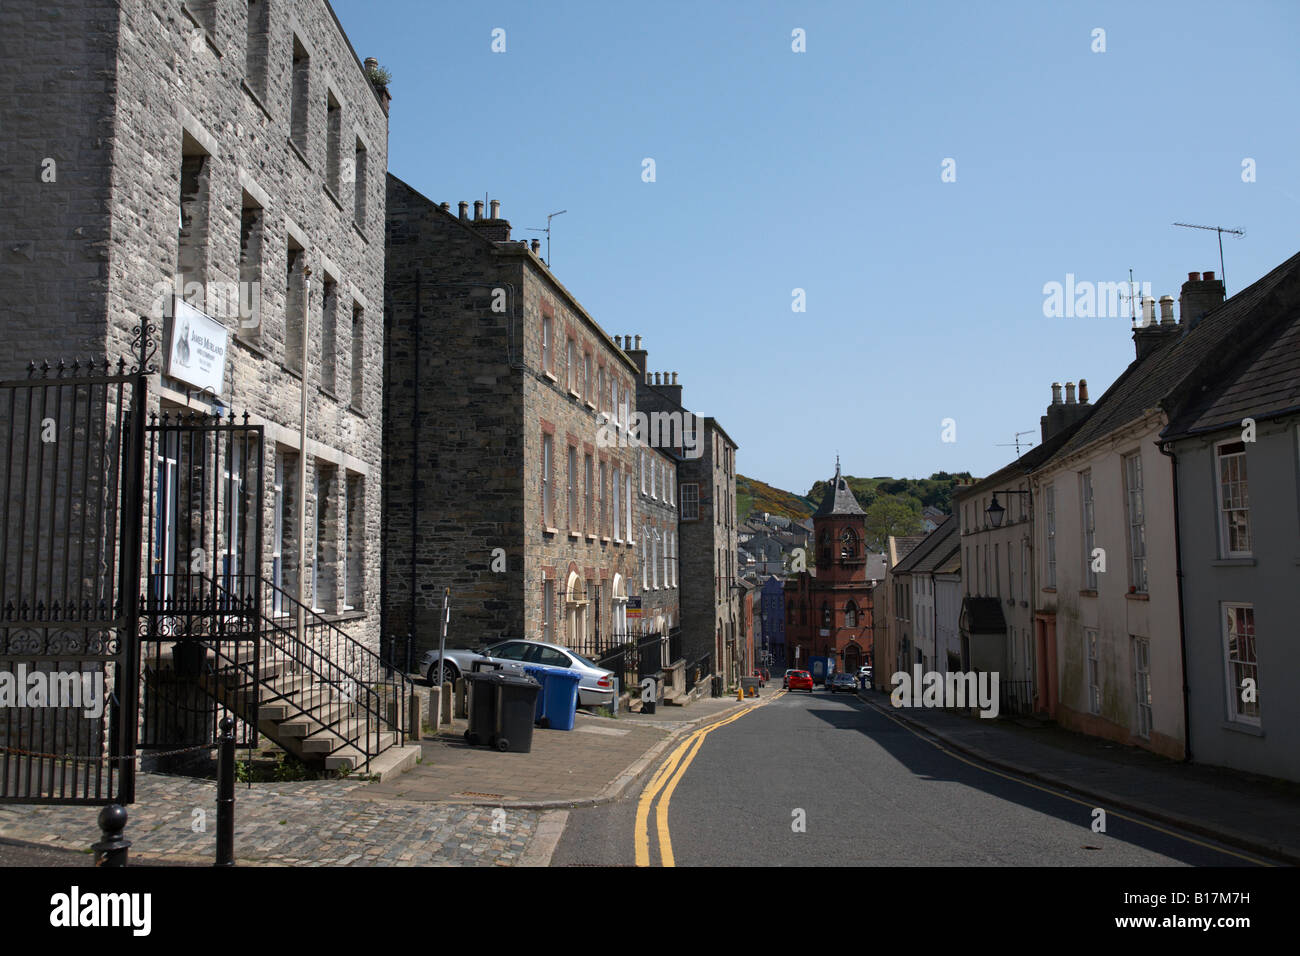 Case in stile georgiano in inglese street downpatrick contea di Down Irlanda del Nord Foto Stock